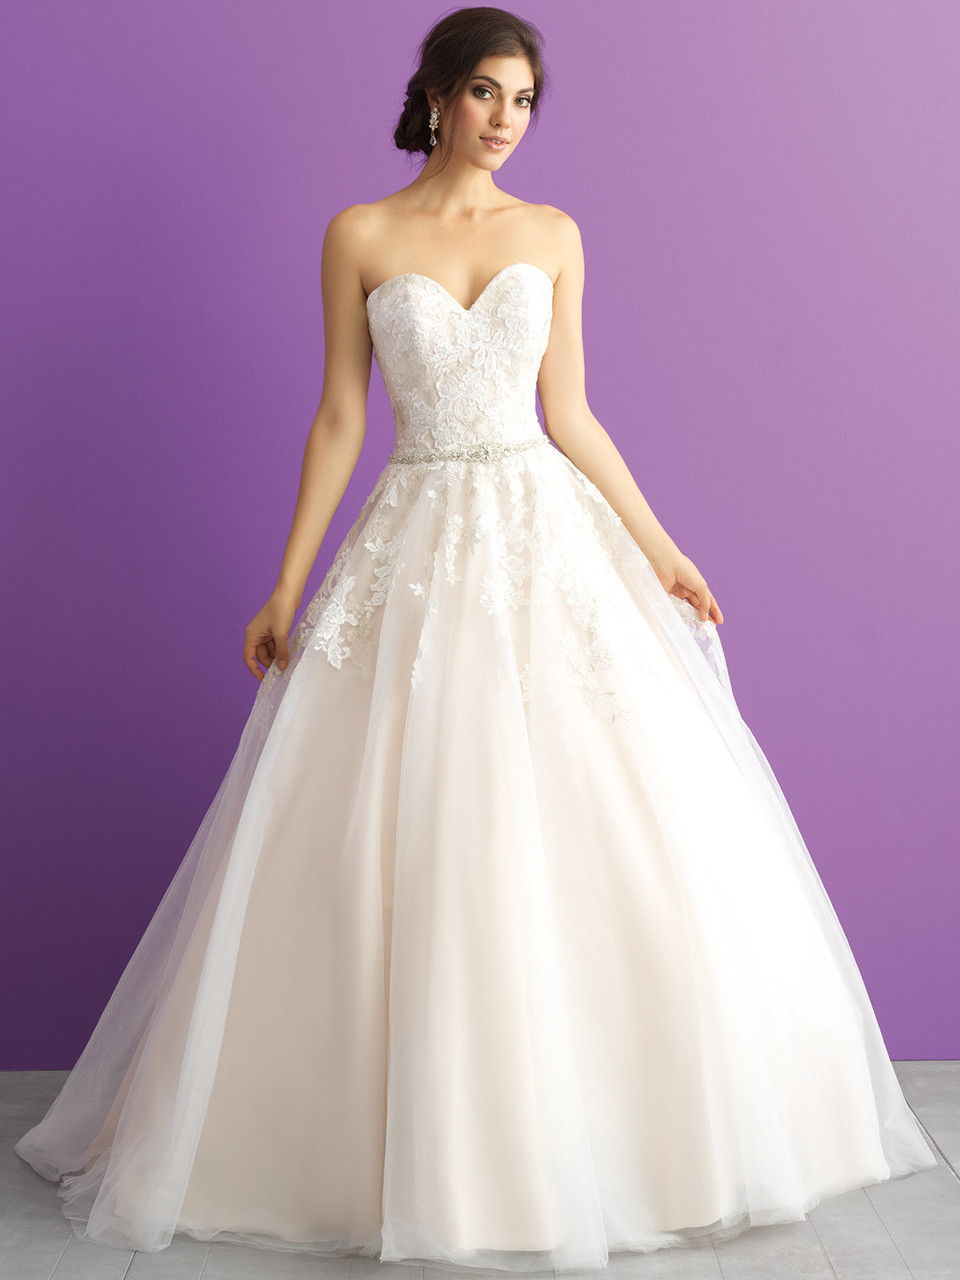 Allure Romance 3001 Sweetheart Ball Gown Wedding Dress - DimitraDesigns.com